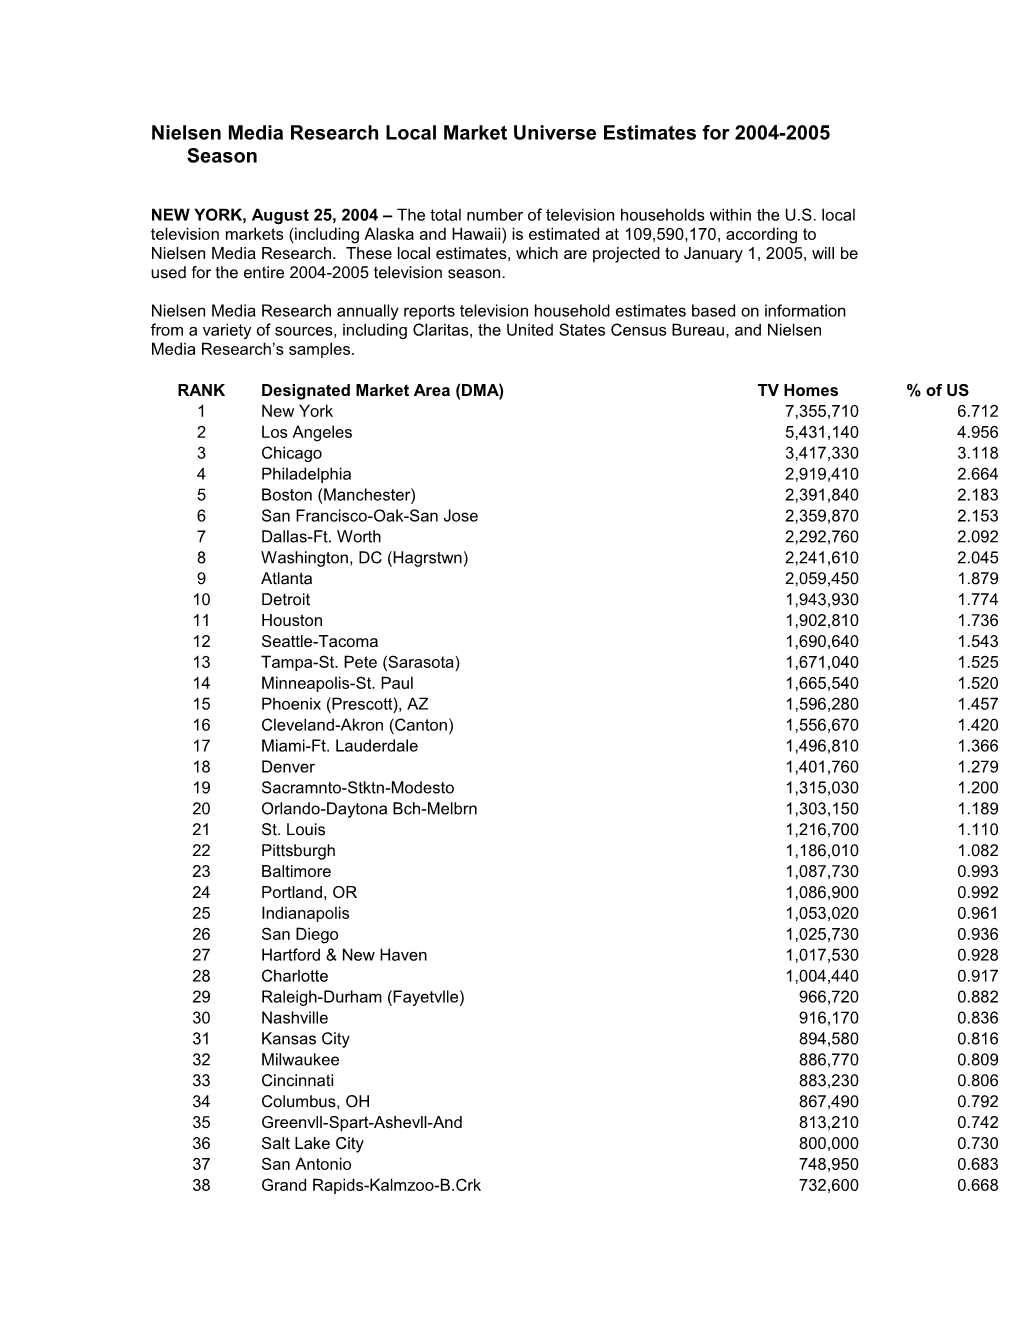 Nielsen Media Research Local Market Universe Estimates for 2004-2005 Season